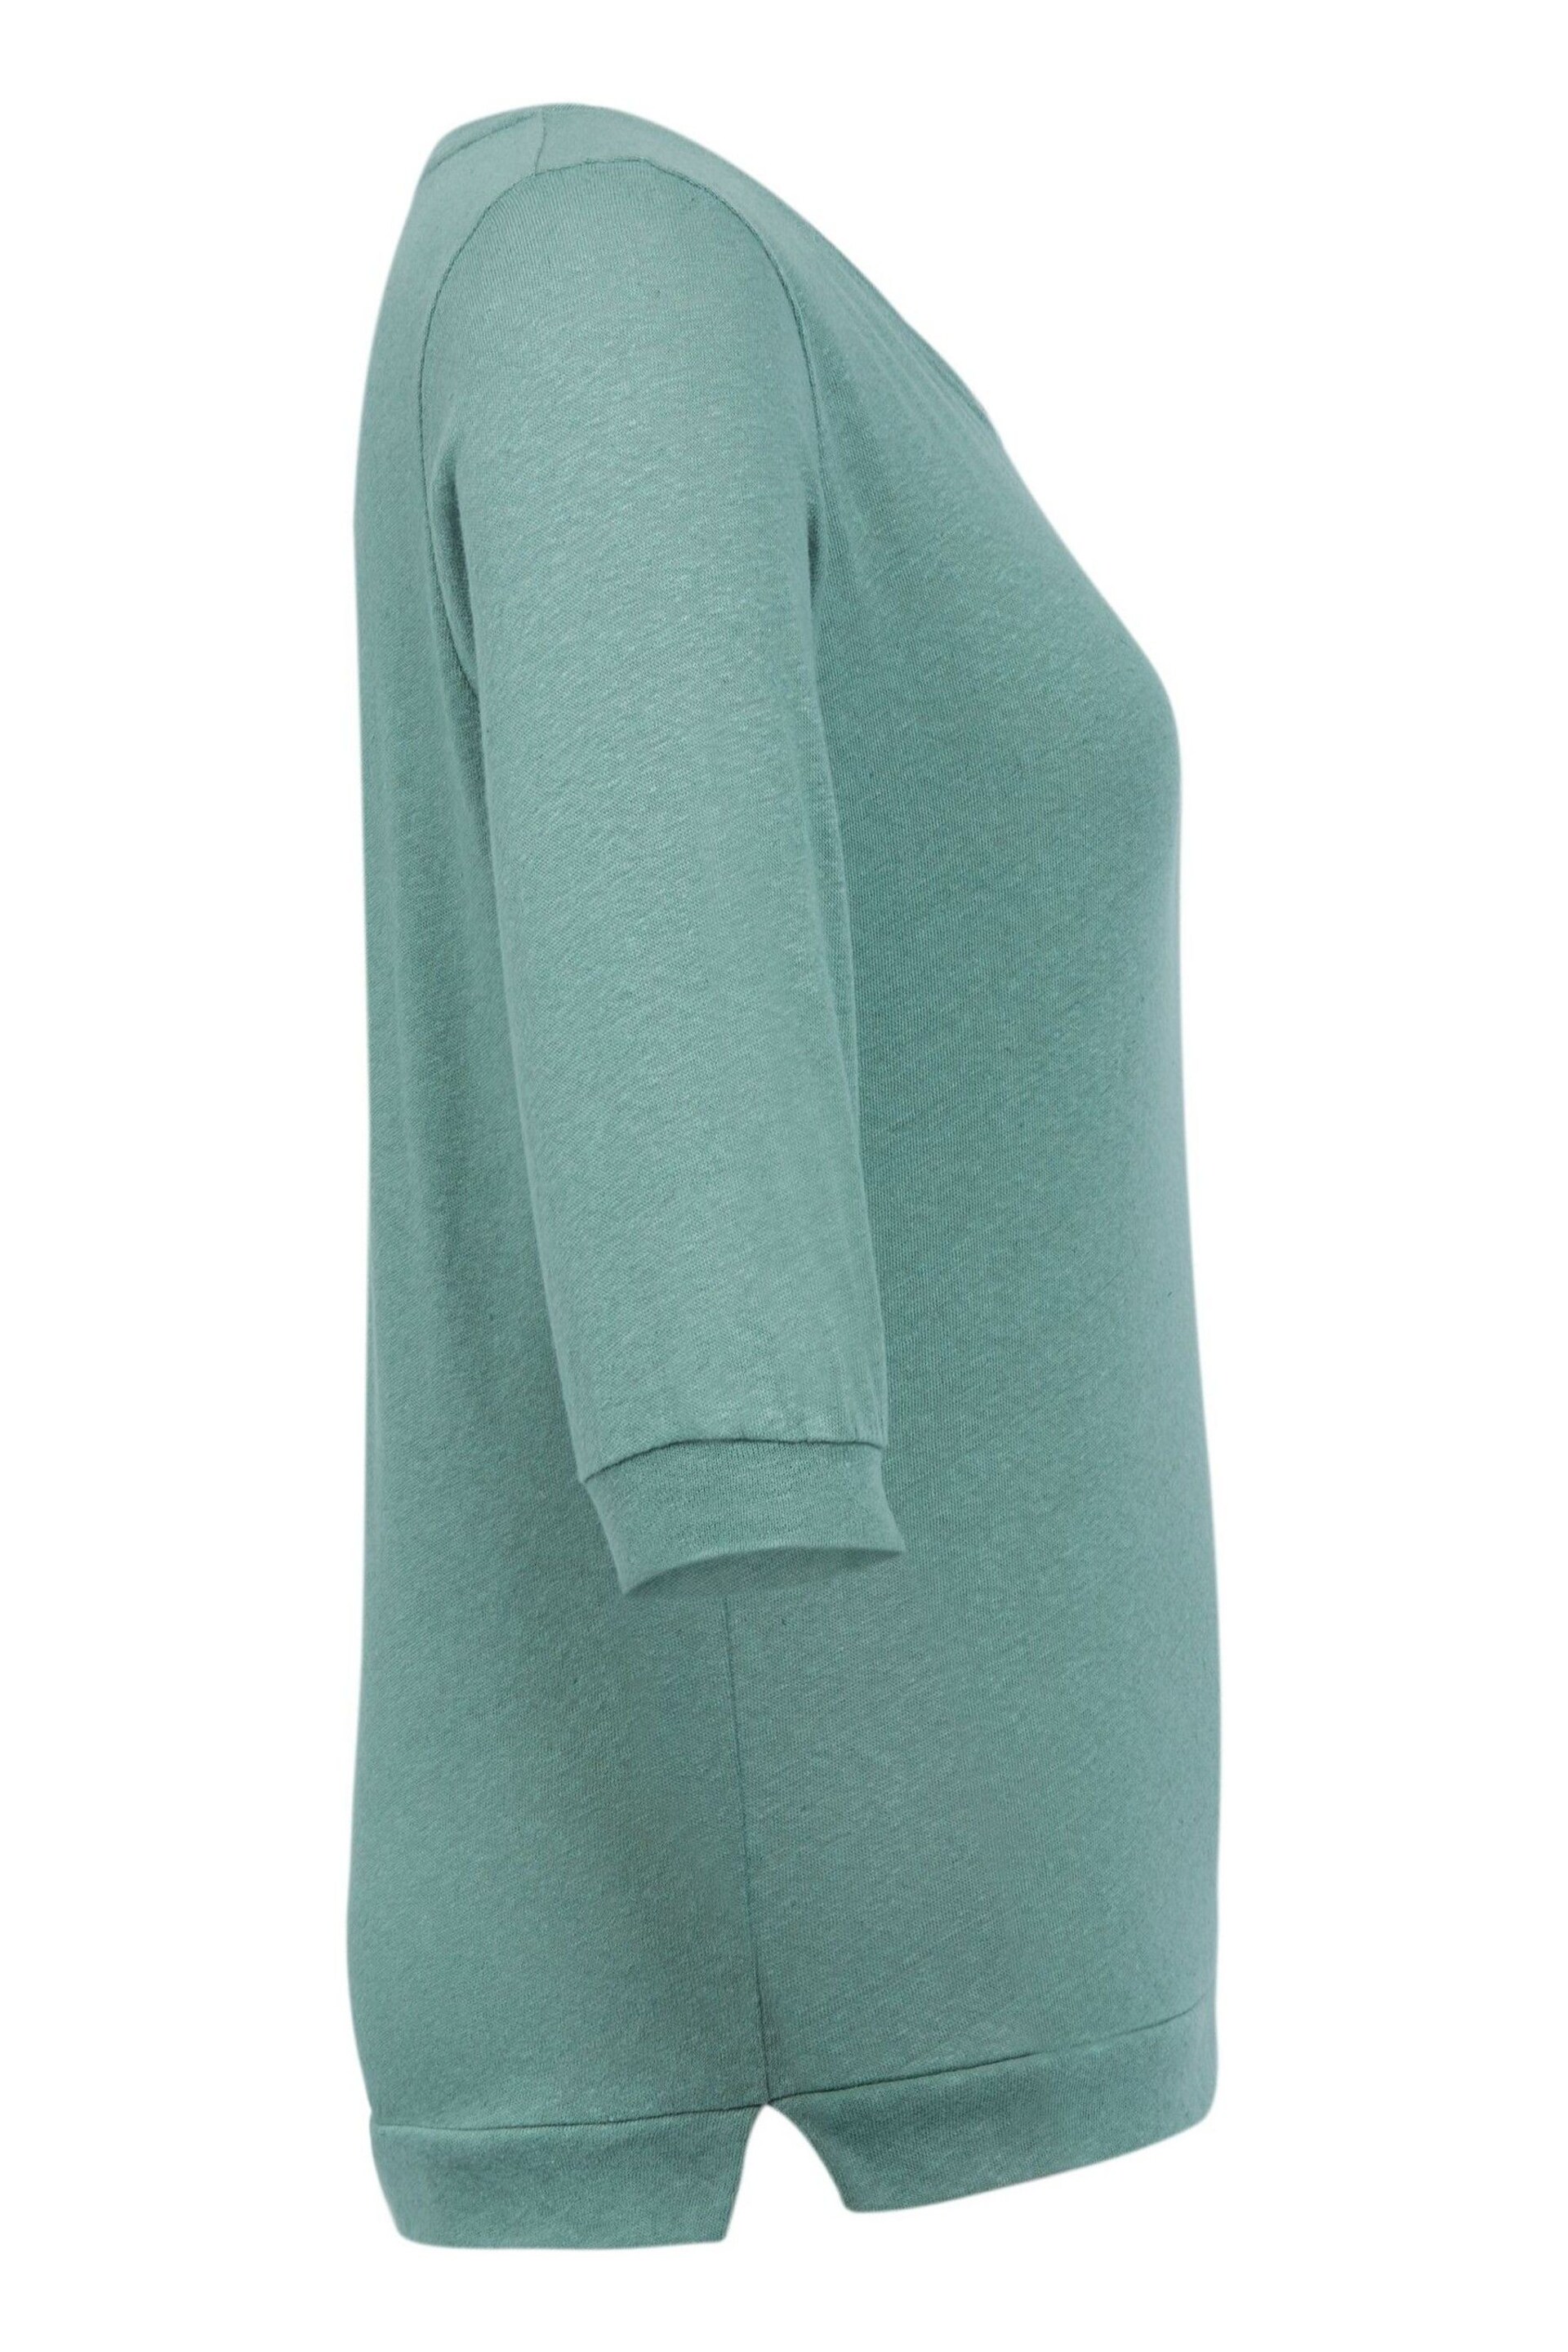 Celtic & Co. Green Linen Cotton Half Sleeve Sweatshirt - Image 6 of 7